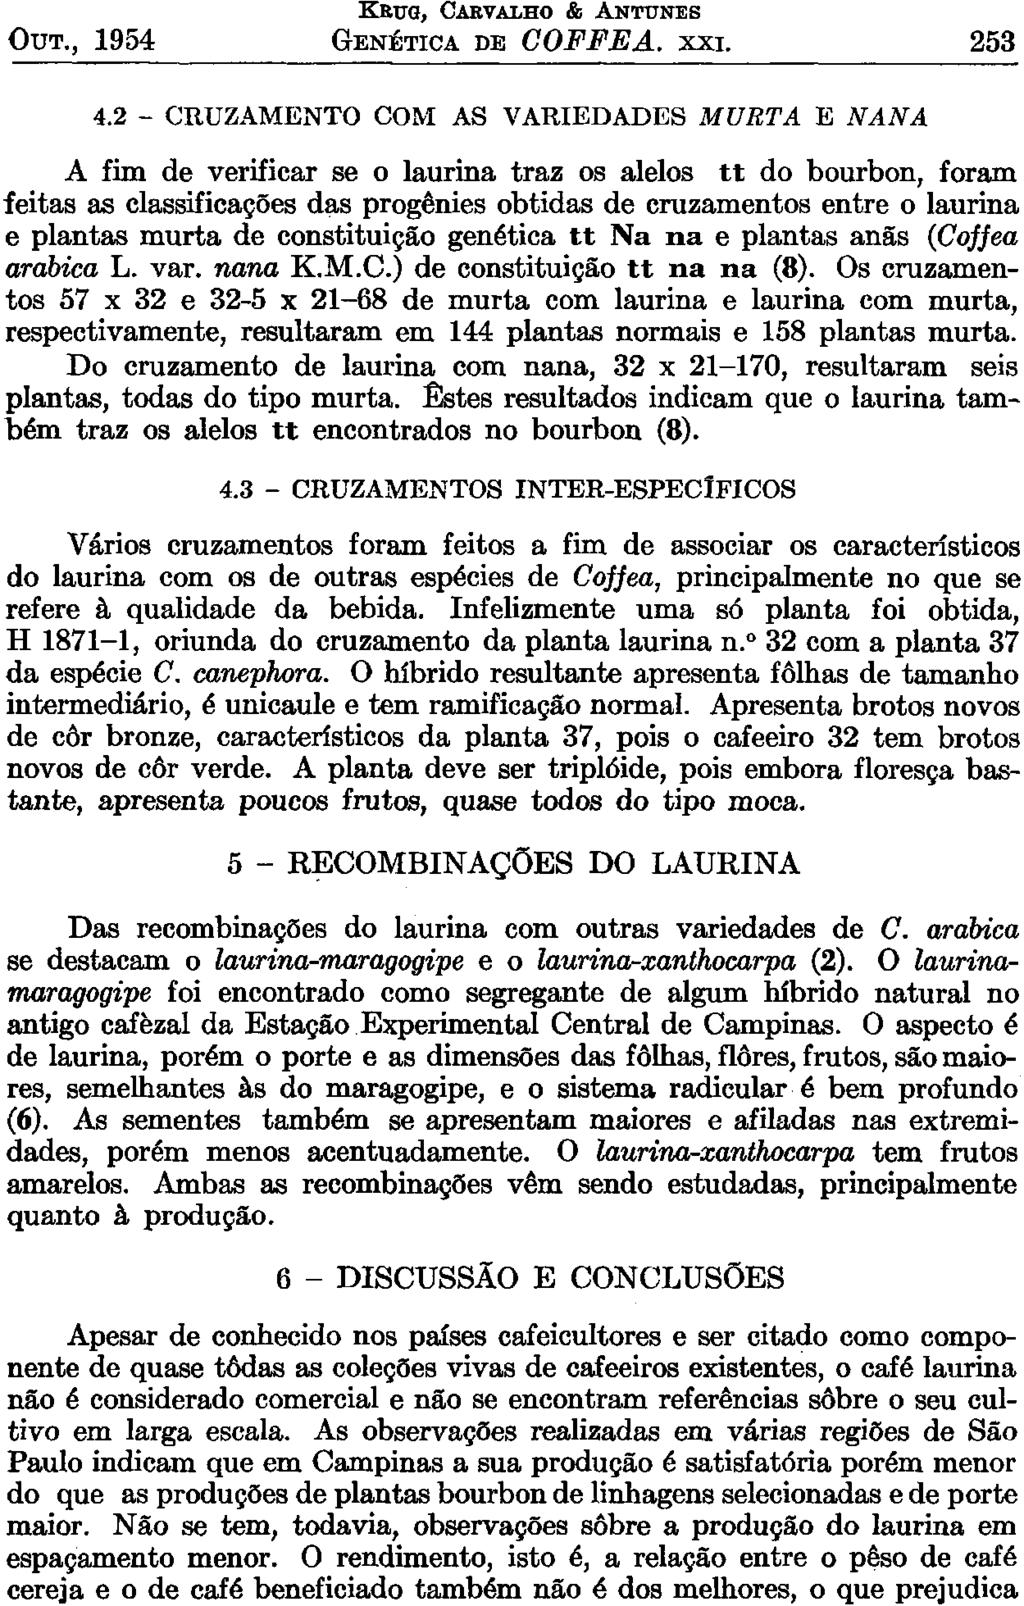 OUT., 1954 KRUG, CARVALHO & ANTUNES GENÉTICA DE COFFEA. xxi. 253 4.